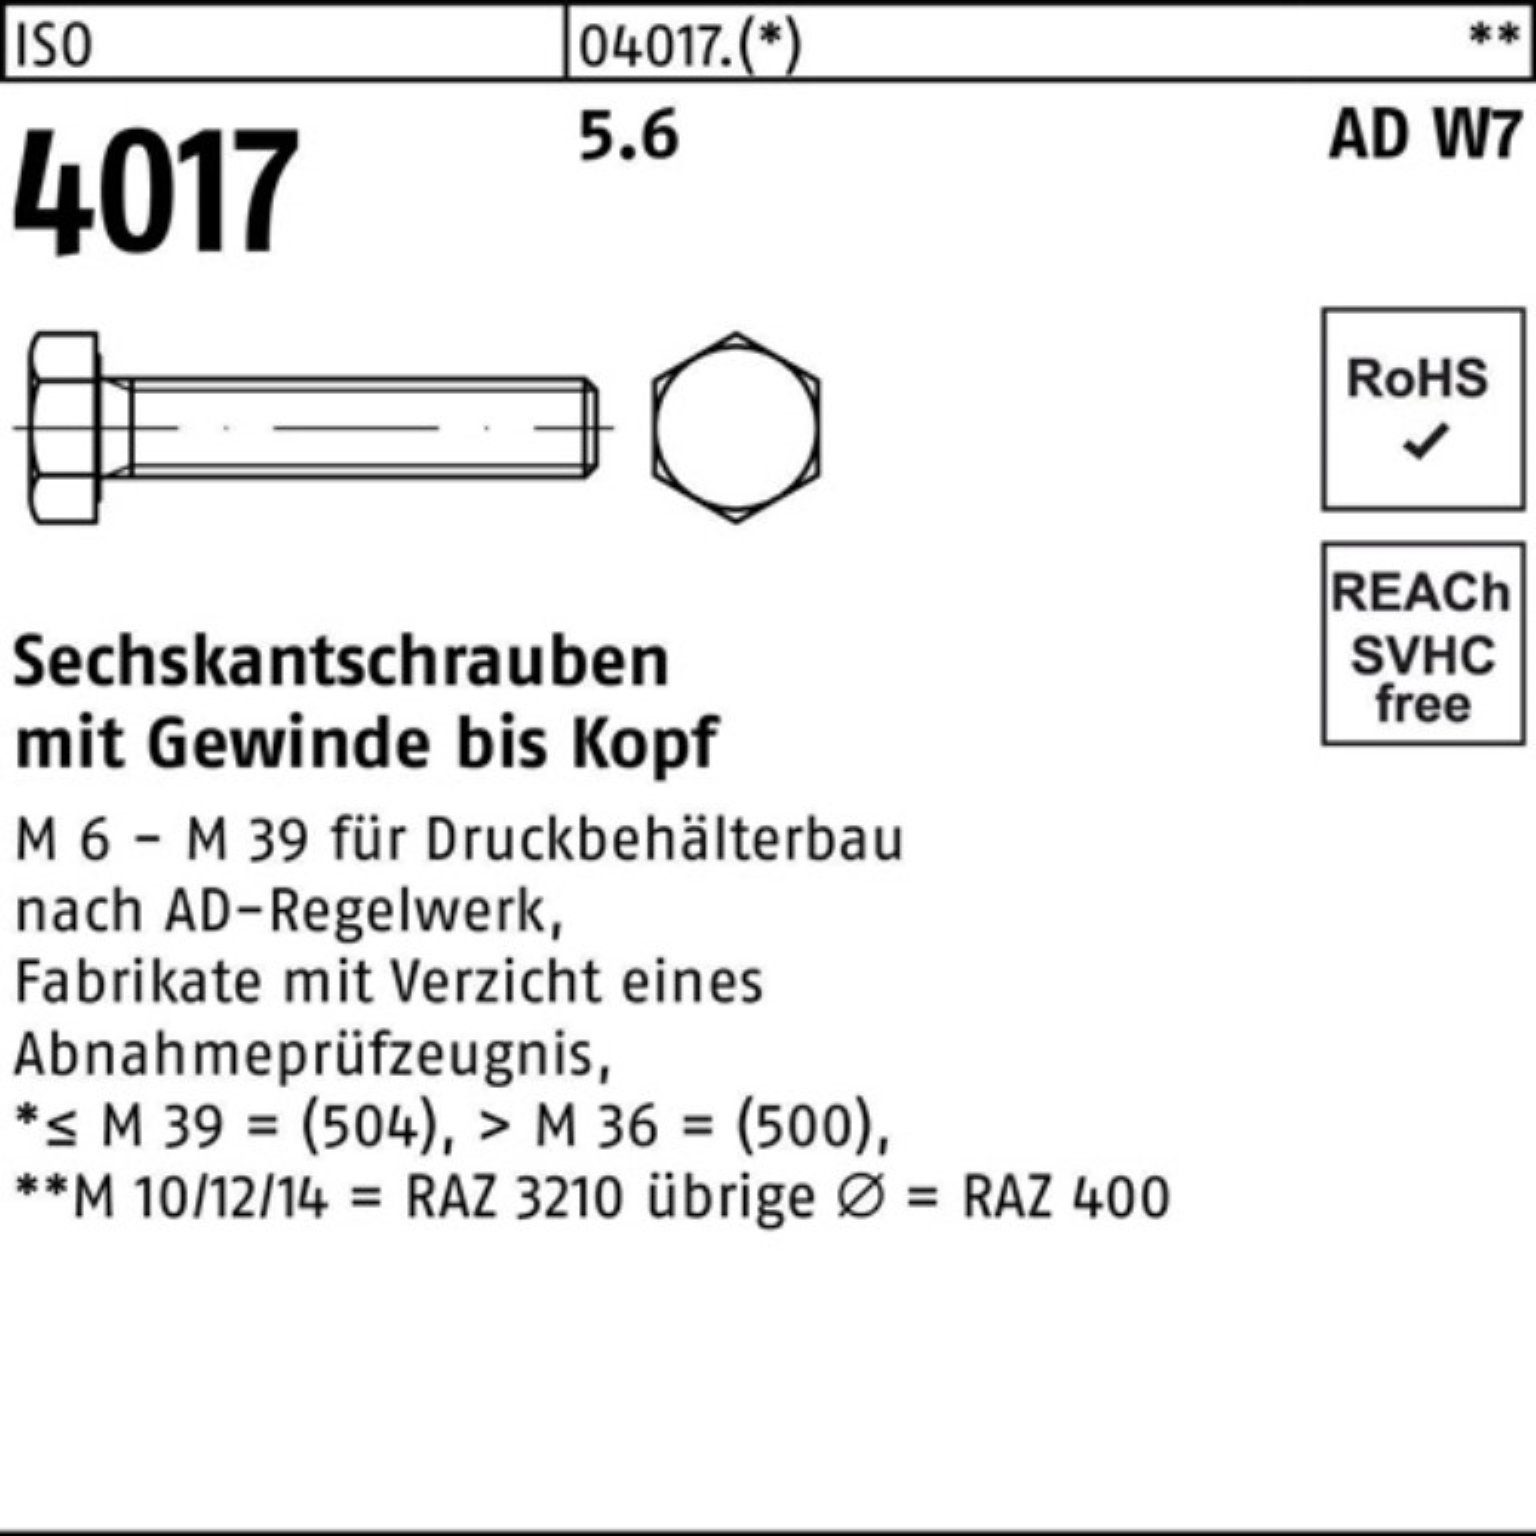 110 Sechskantschraube M30x Pack W7 Sechskantschraube AD 4017 Bufab VG ISO I 100er 1 5.6 Stück